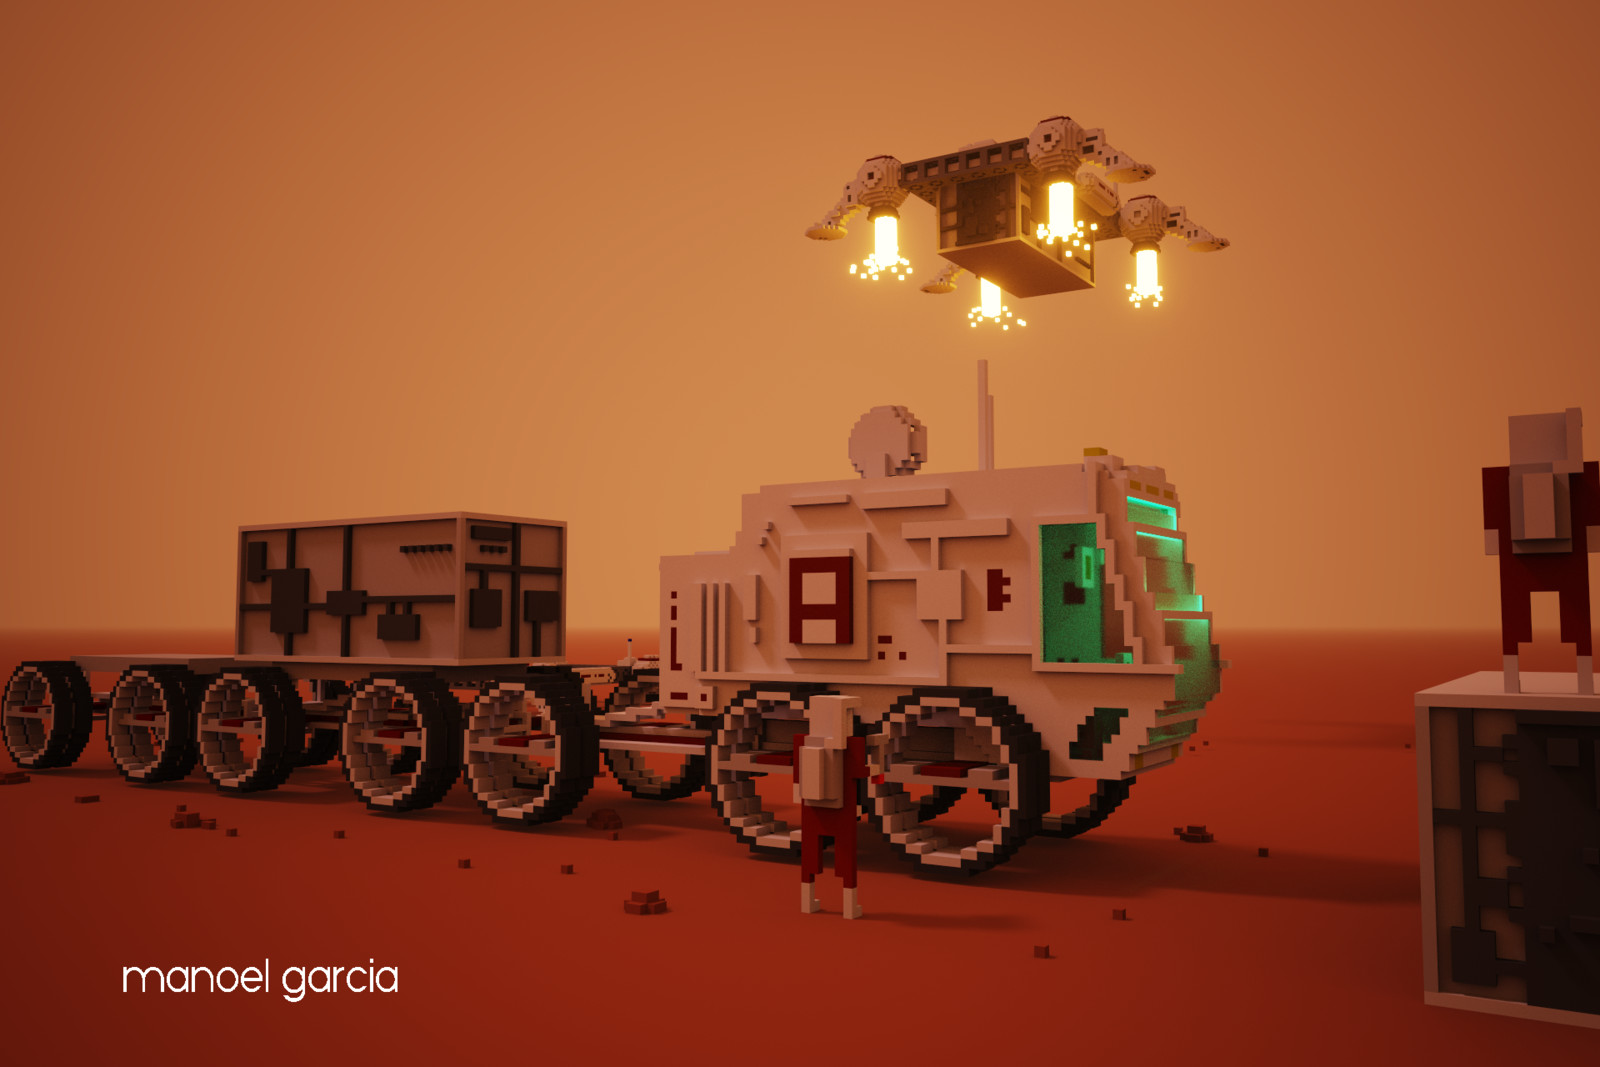 Arriving in Mars